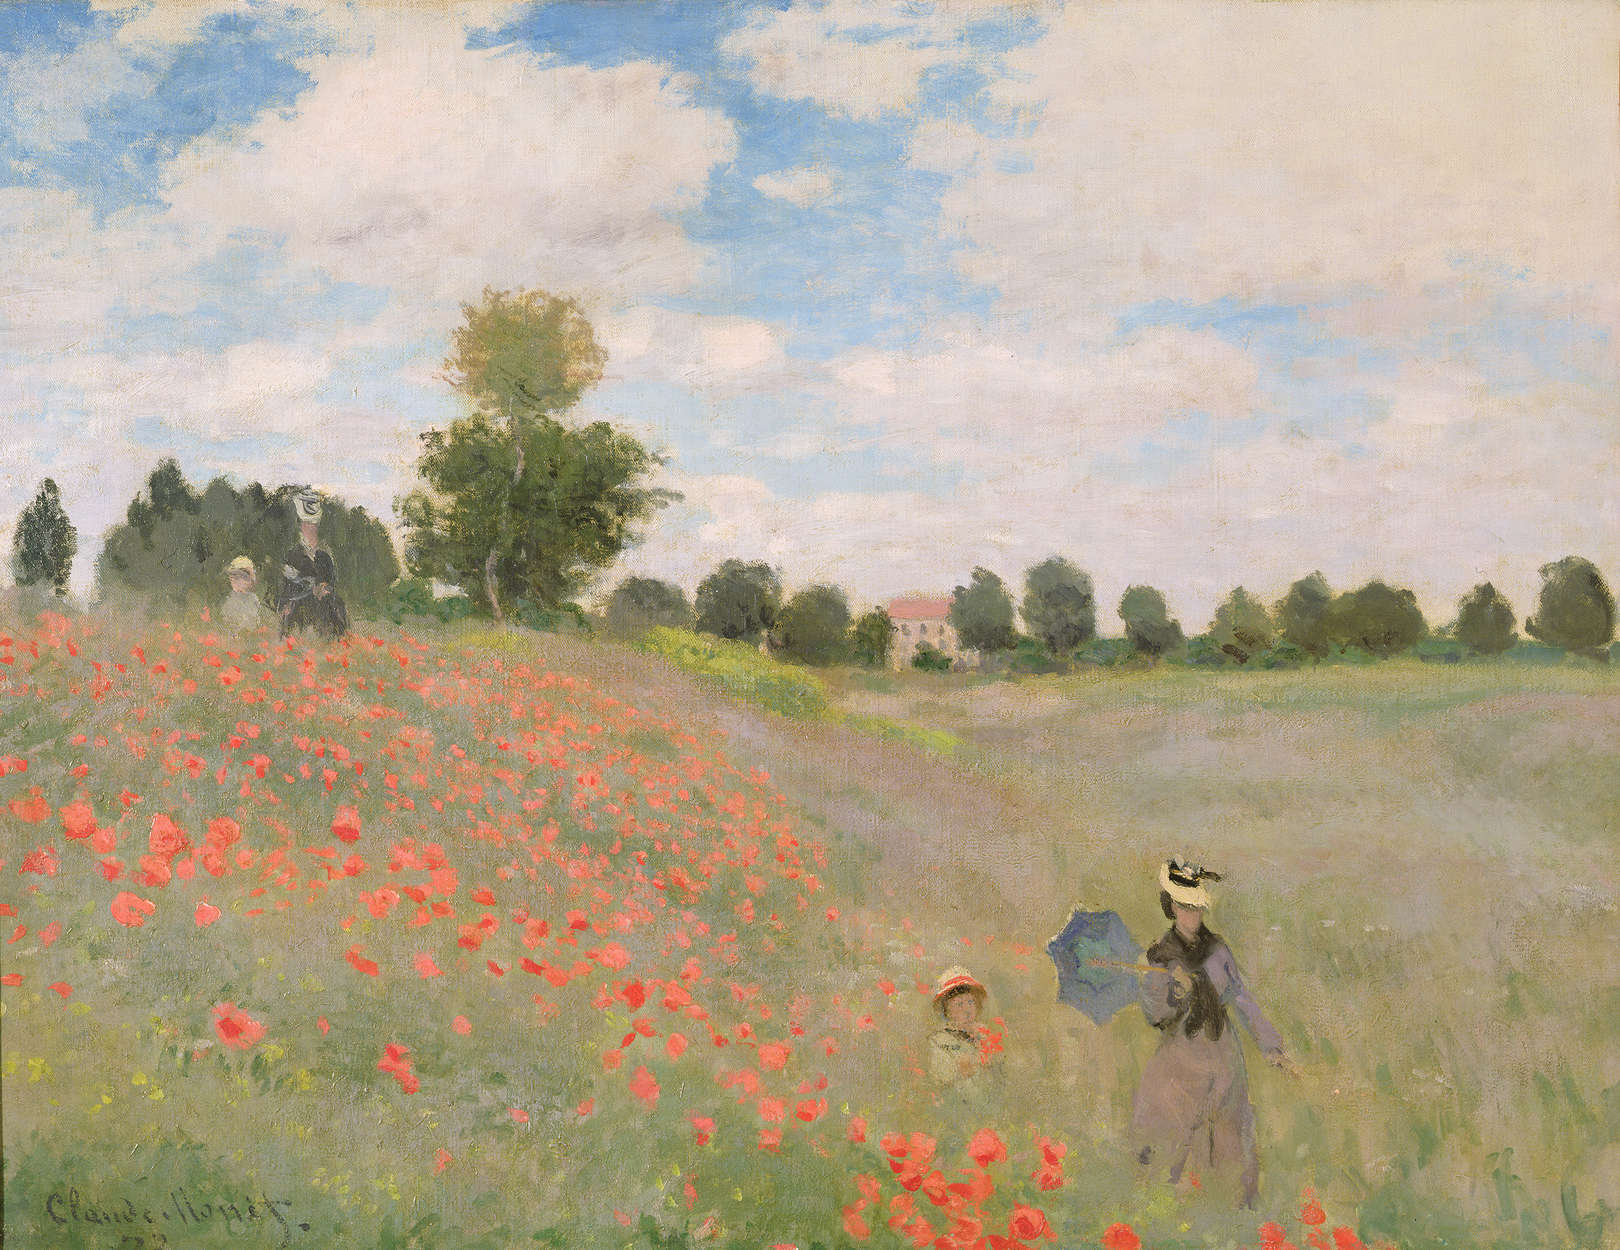             Photo wallpaper "Wild poppies" by Claude Monet
        